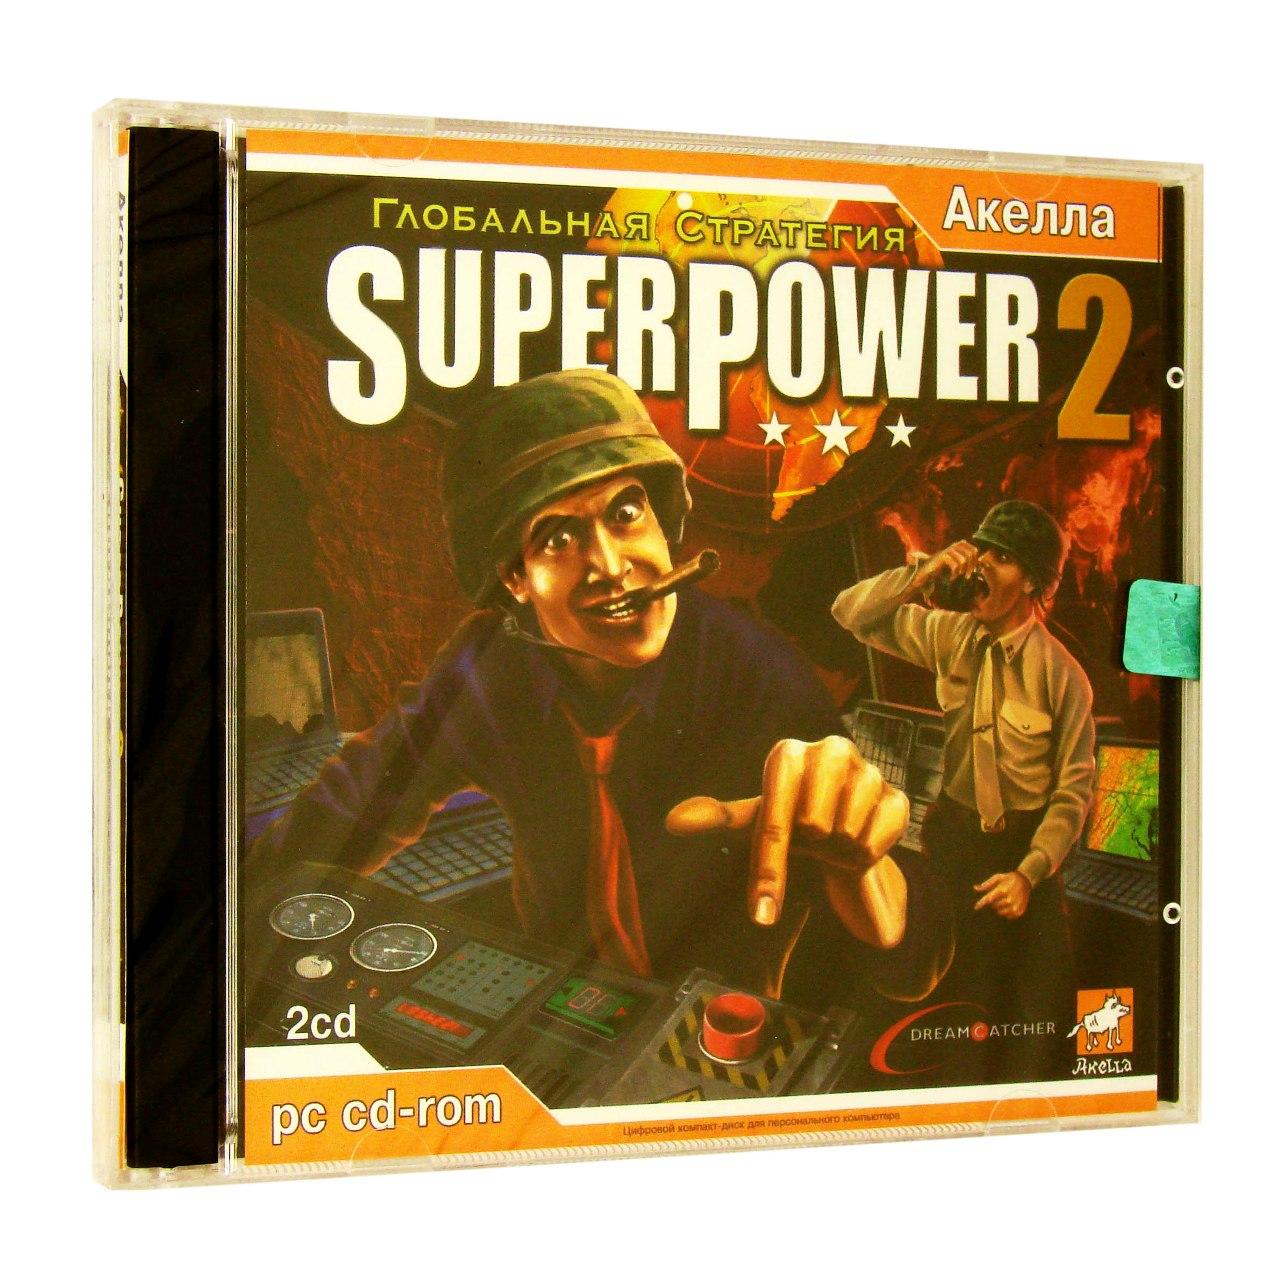 Компьютерный компакт-диск SuperPower 2 (PC), фирма "Акелла", 2CD